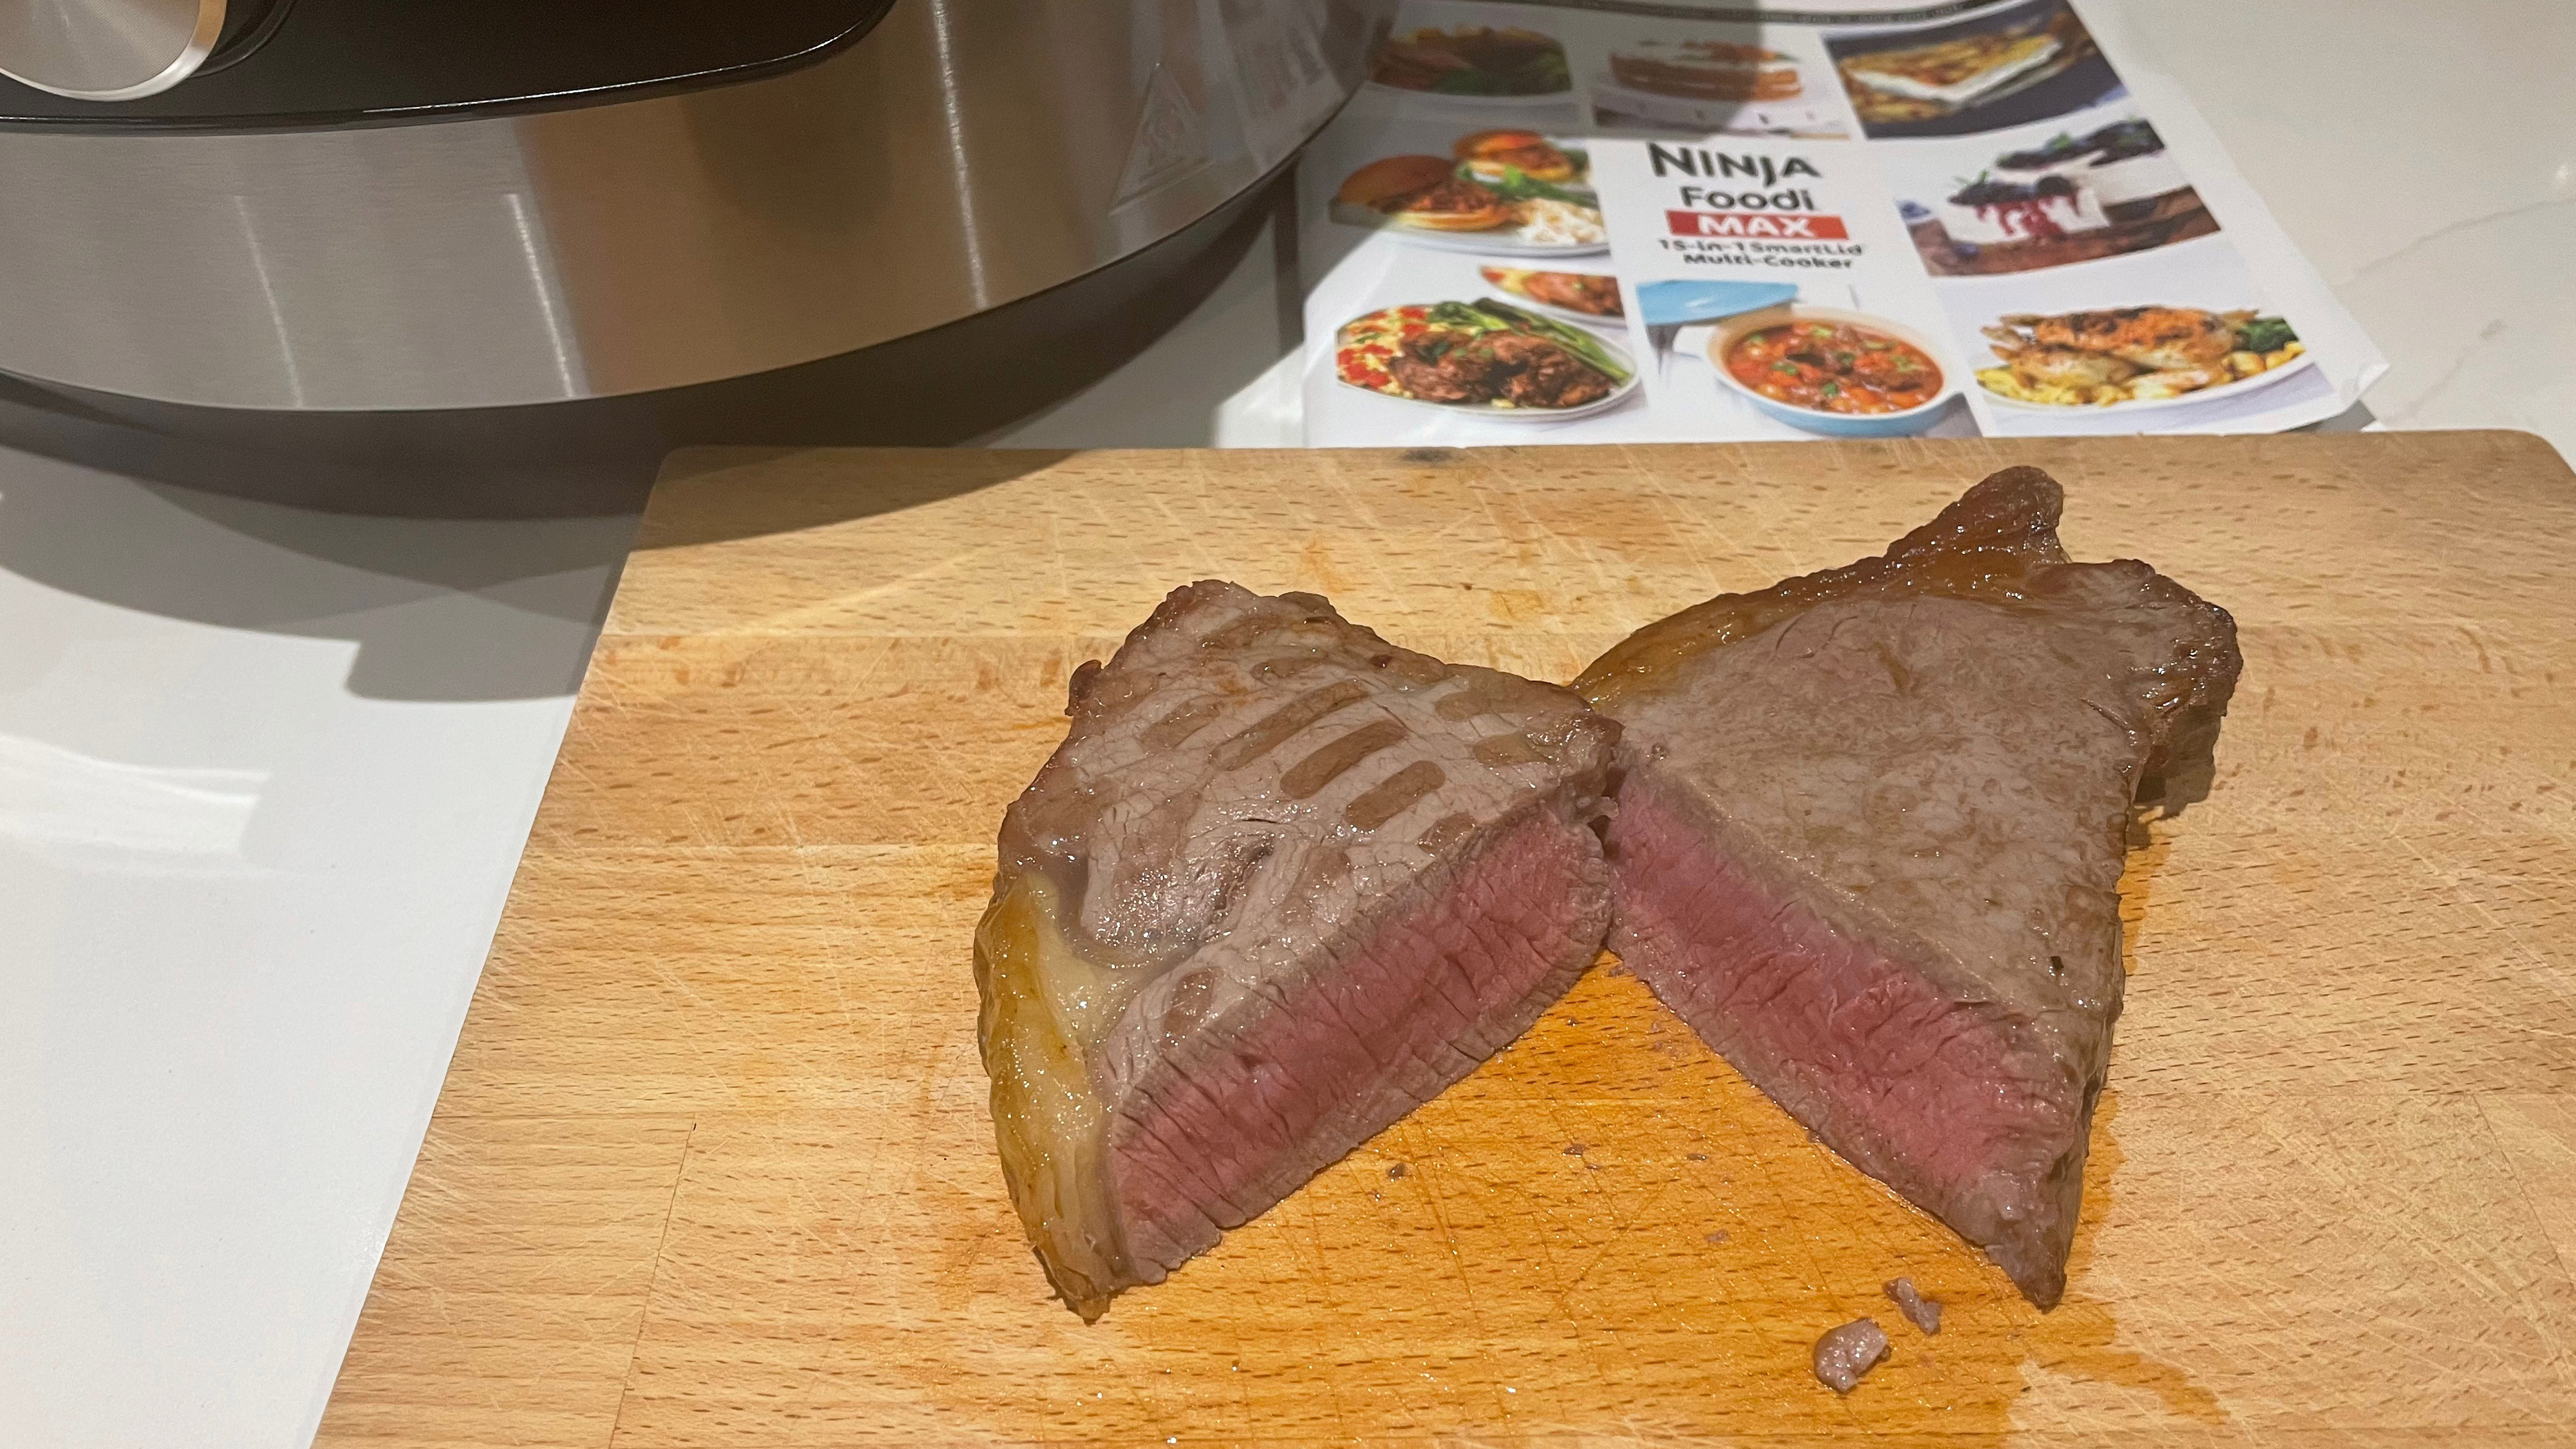 Sirloin steak cooked in the Ninja Foodi 15-in-1 SmartLid Multi-Cooker